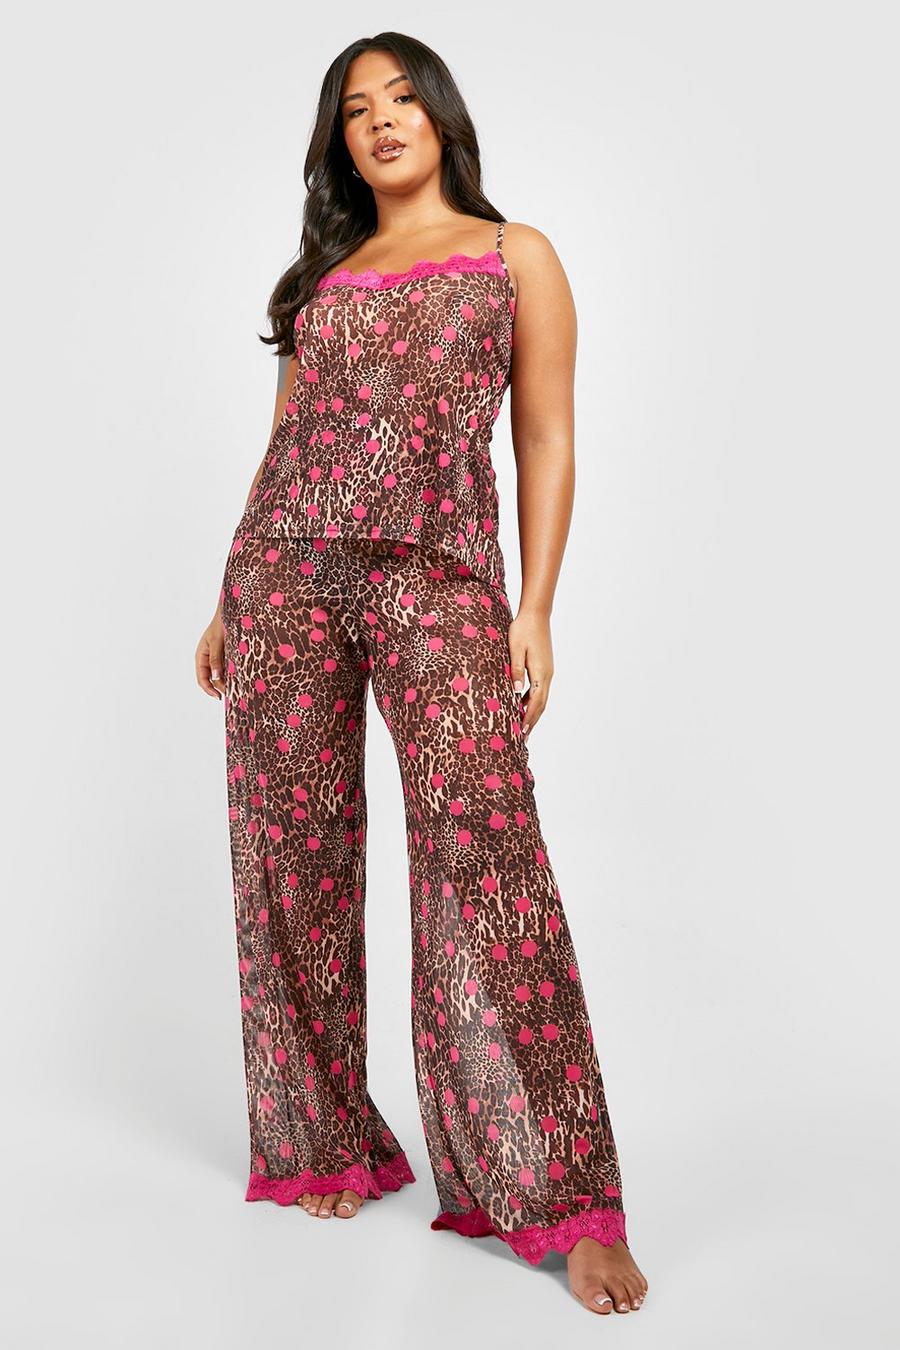 Brown Plus Leopard Print Polka Dot Lace Trim Cami Top & Trousers Pyjama Set